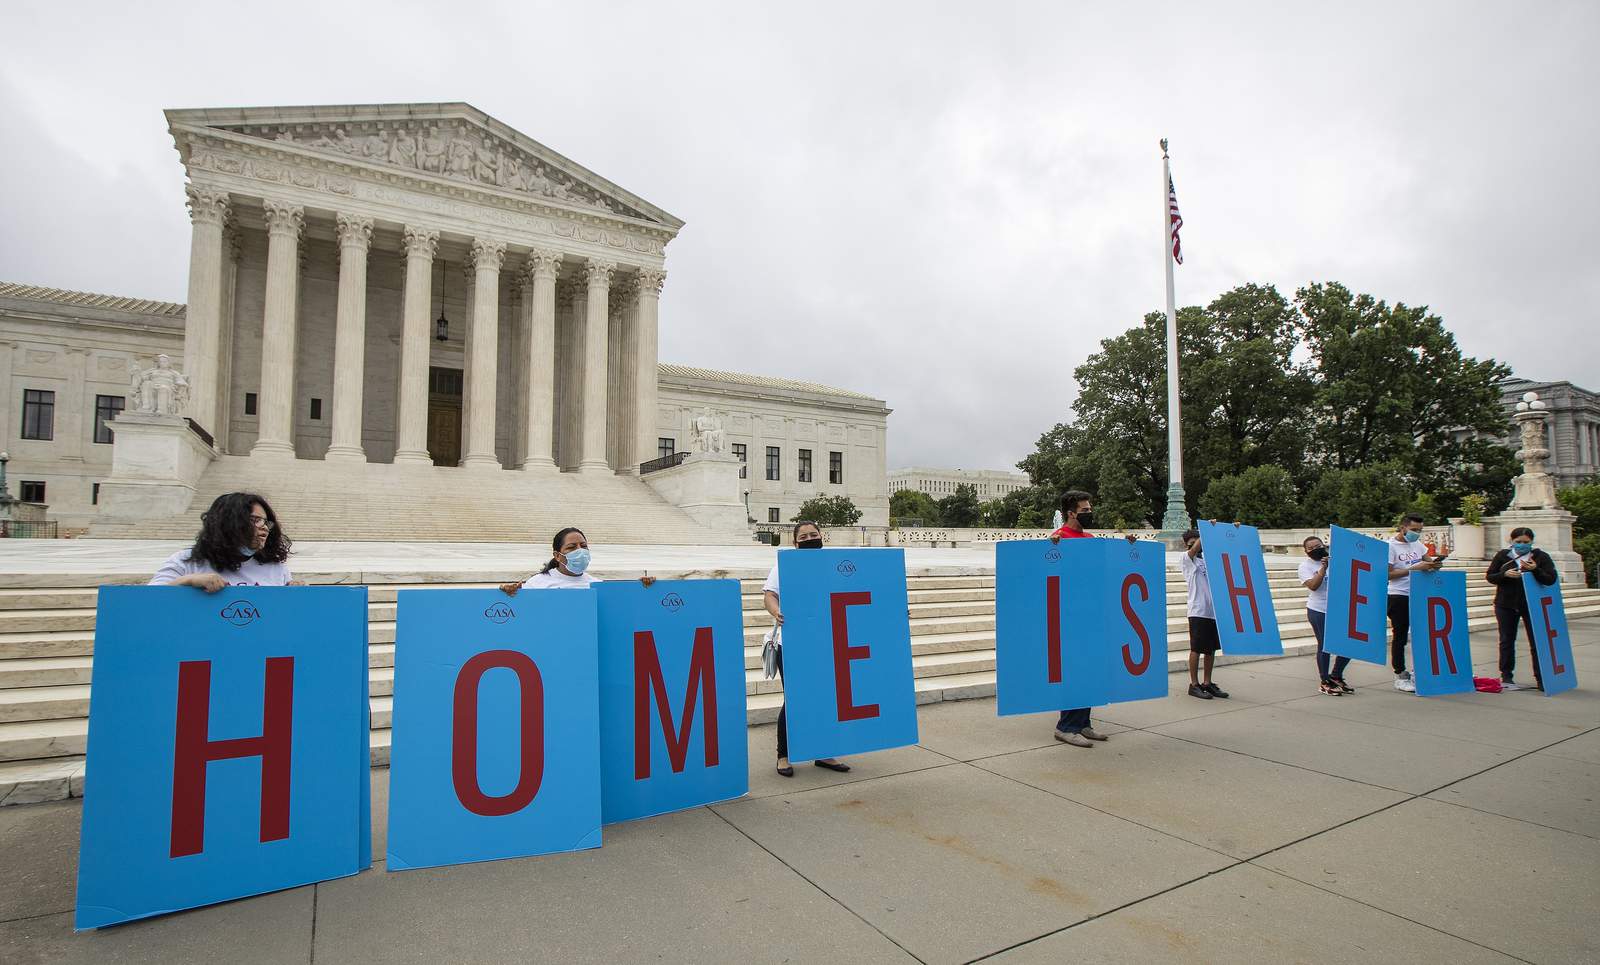 Obama-era program for immigrants faces new court challenge